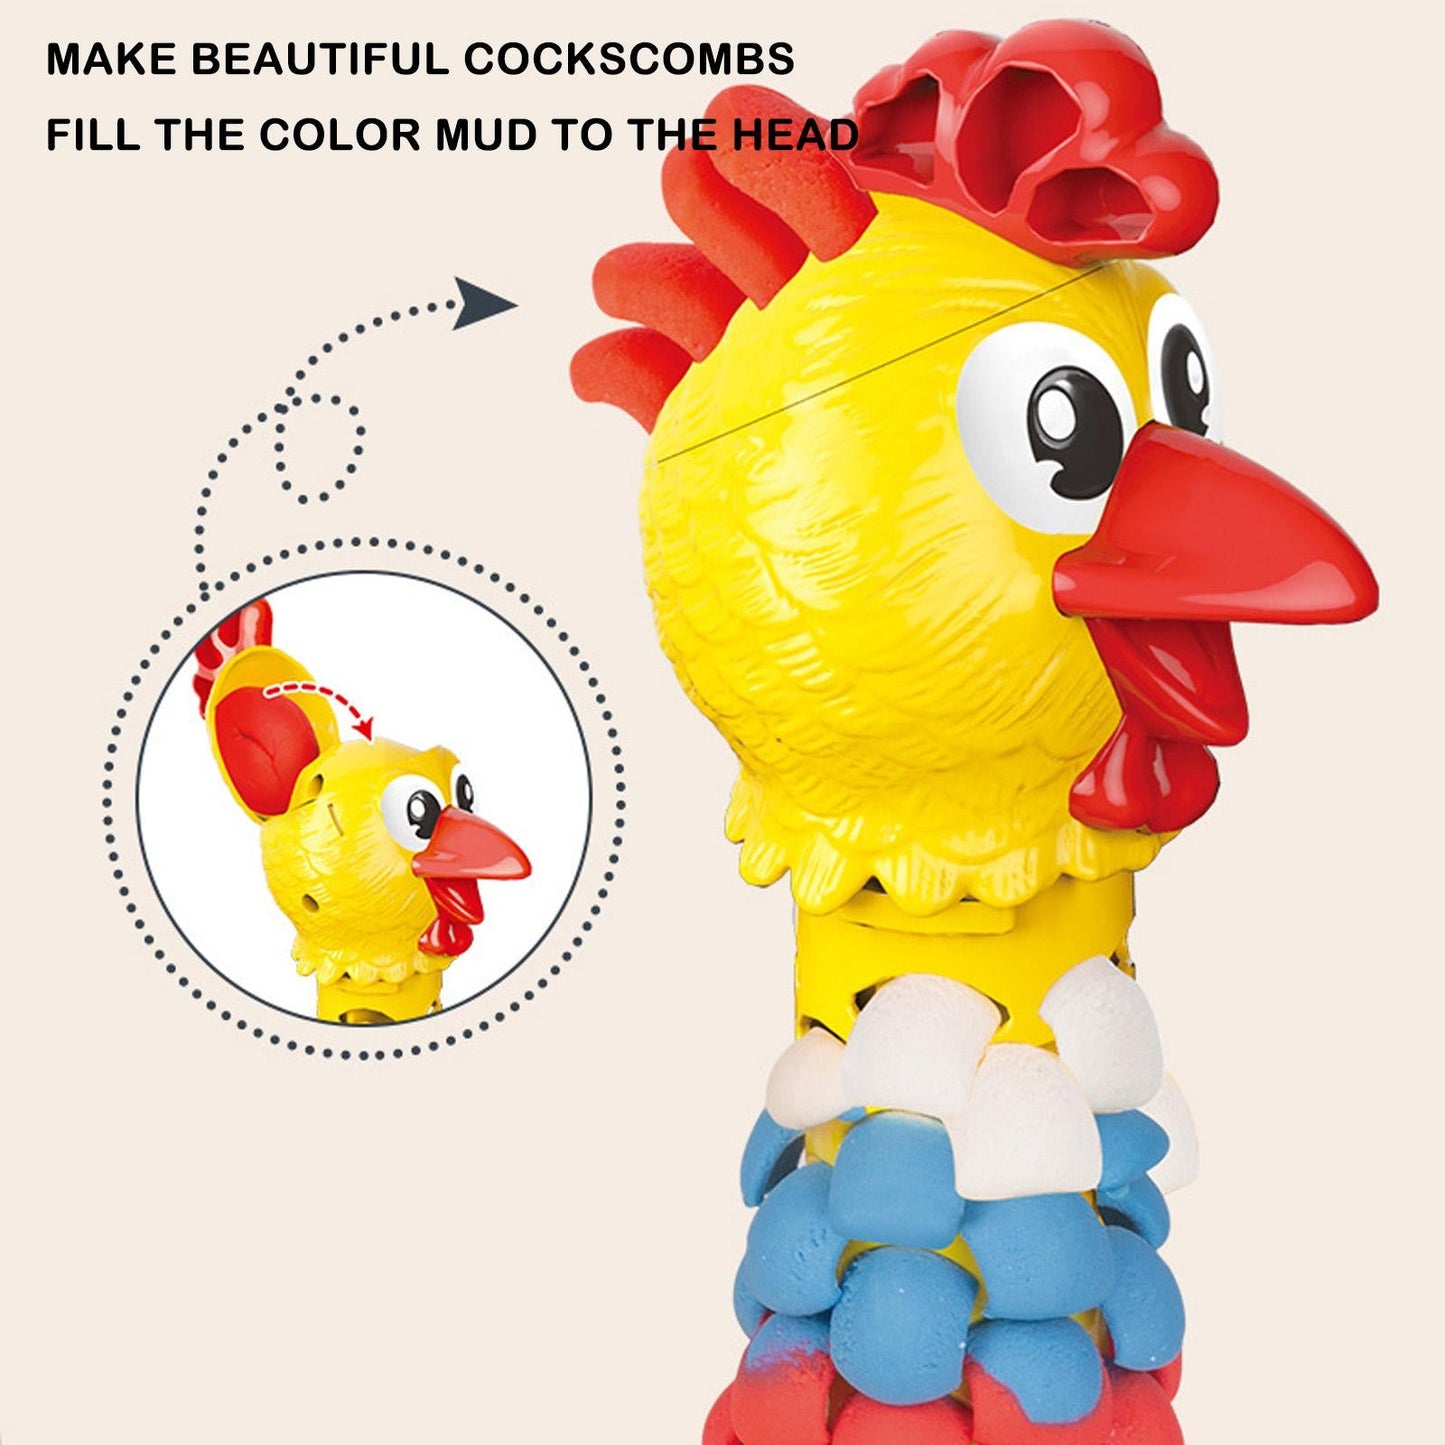 Multicolored DIY Hen Plasticine Toy